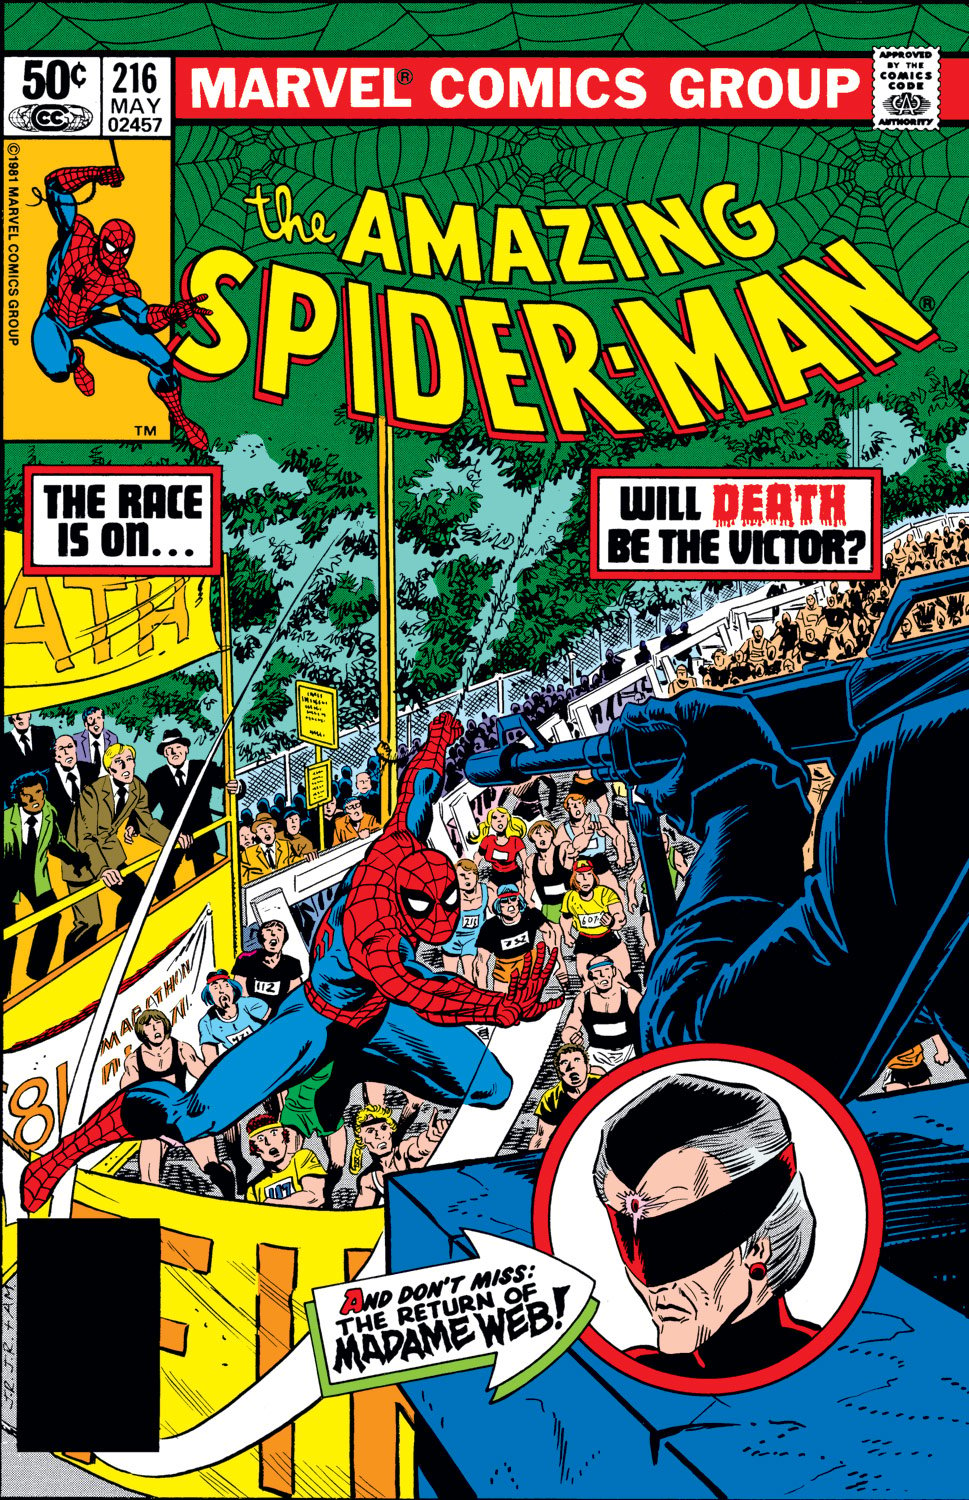 Amazing Spider-Man 216 cover